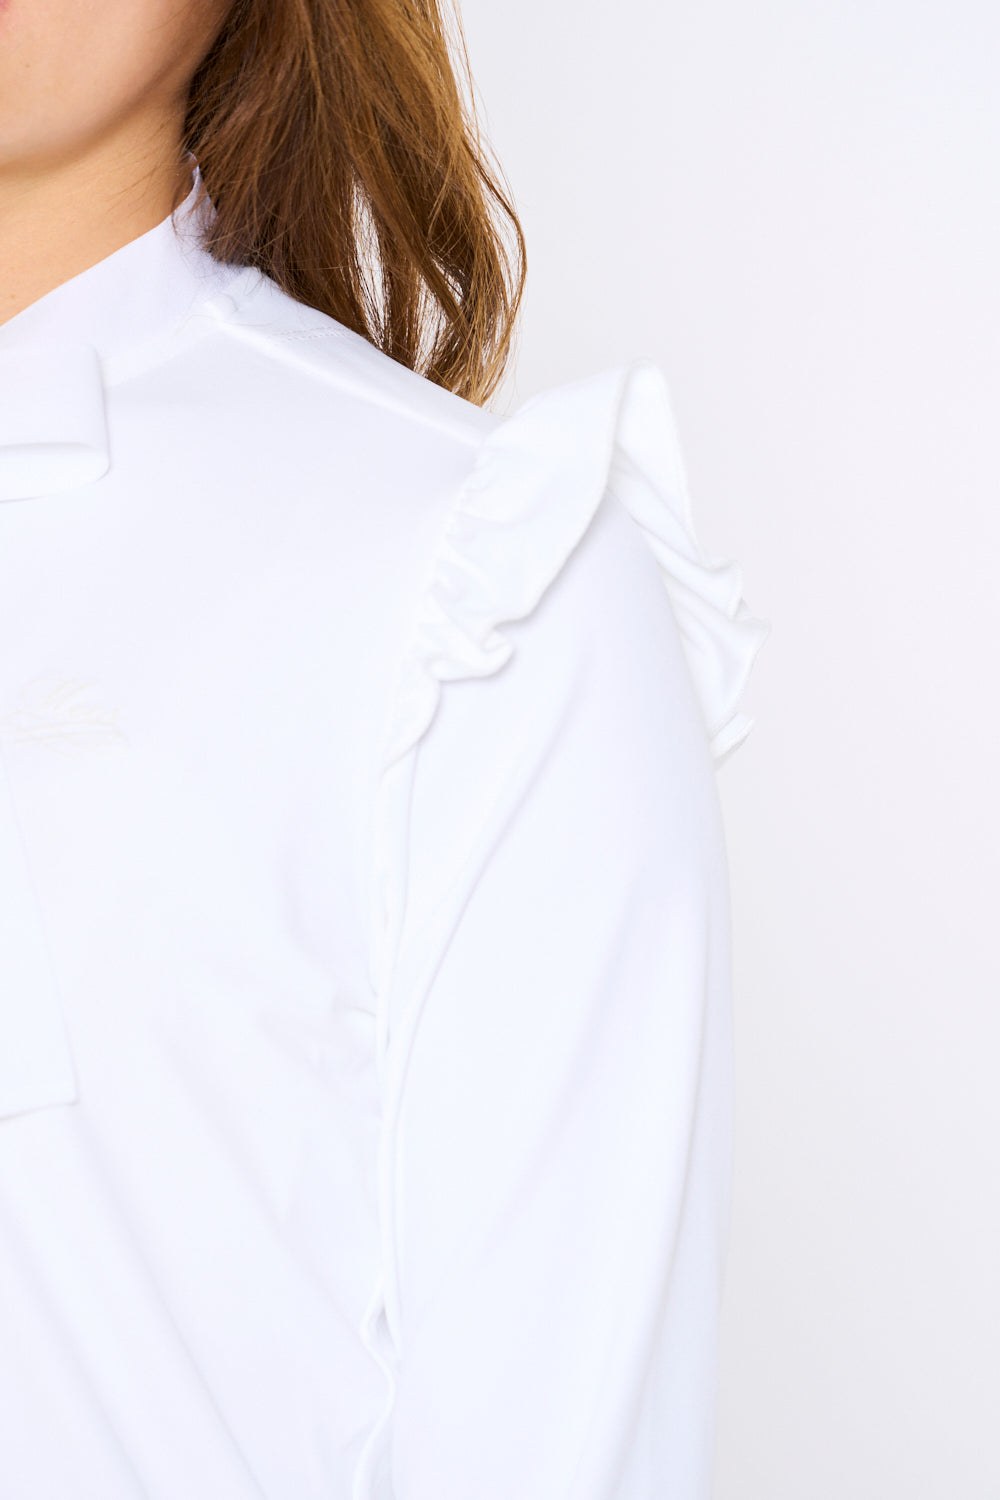 Ribbon color ruffle long sleeve shirt (701H2020)